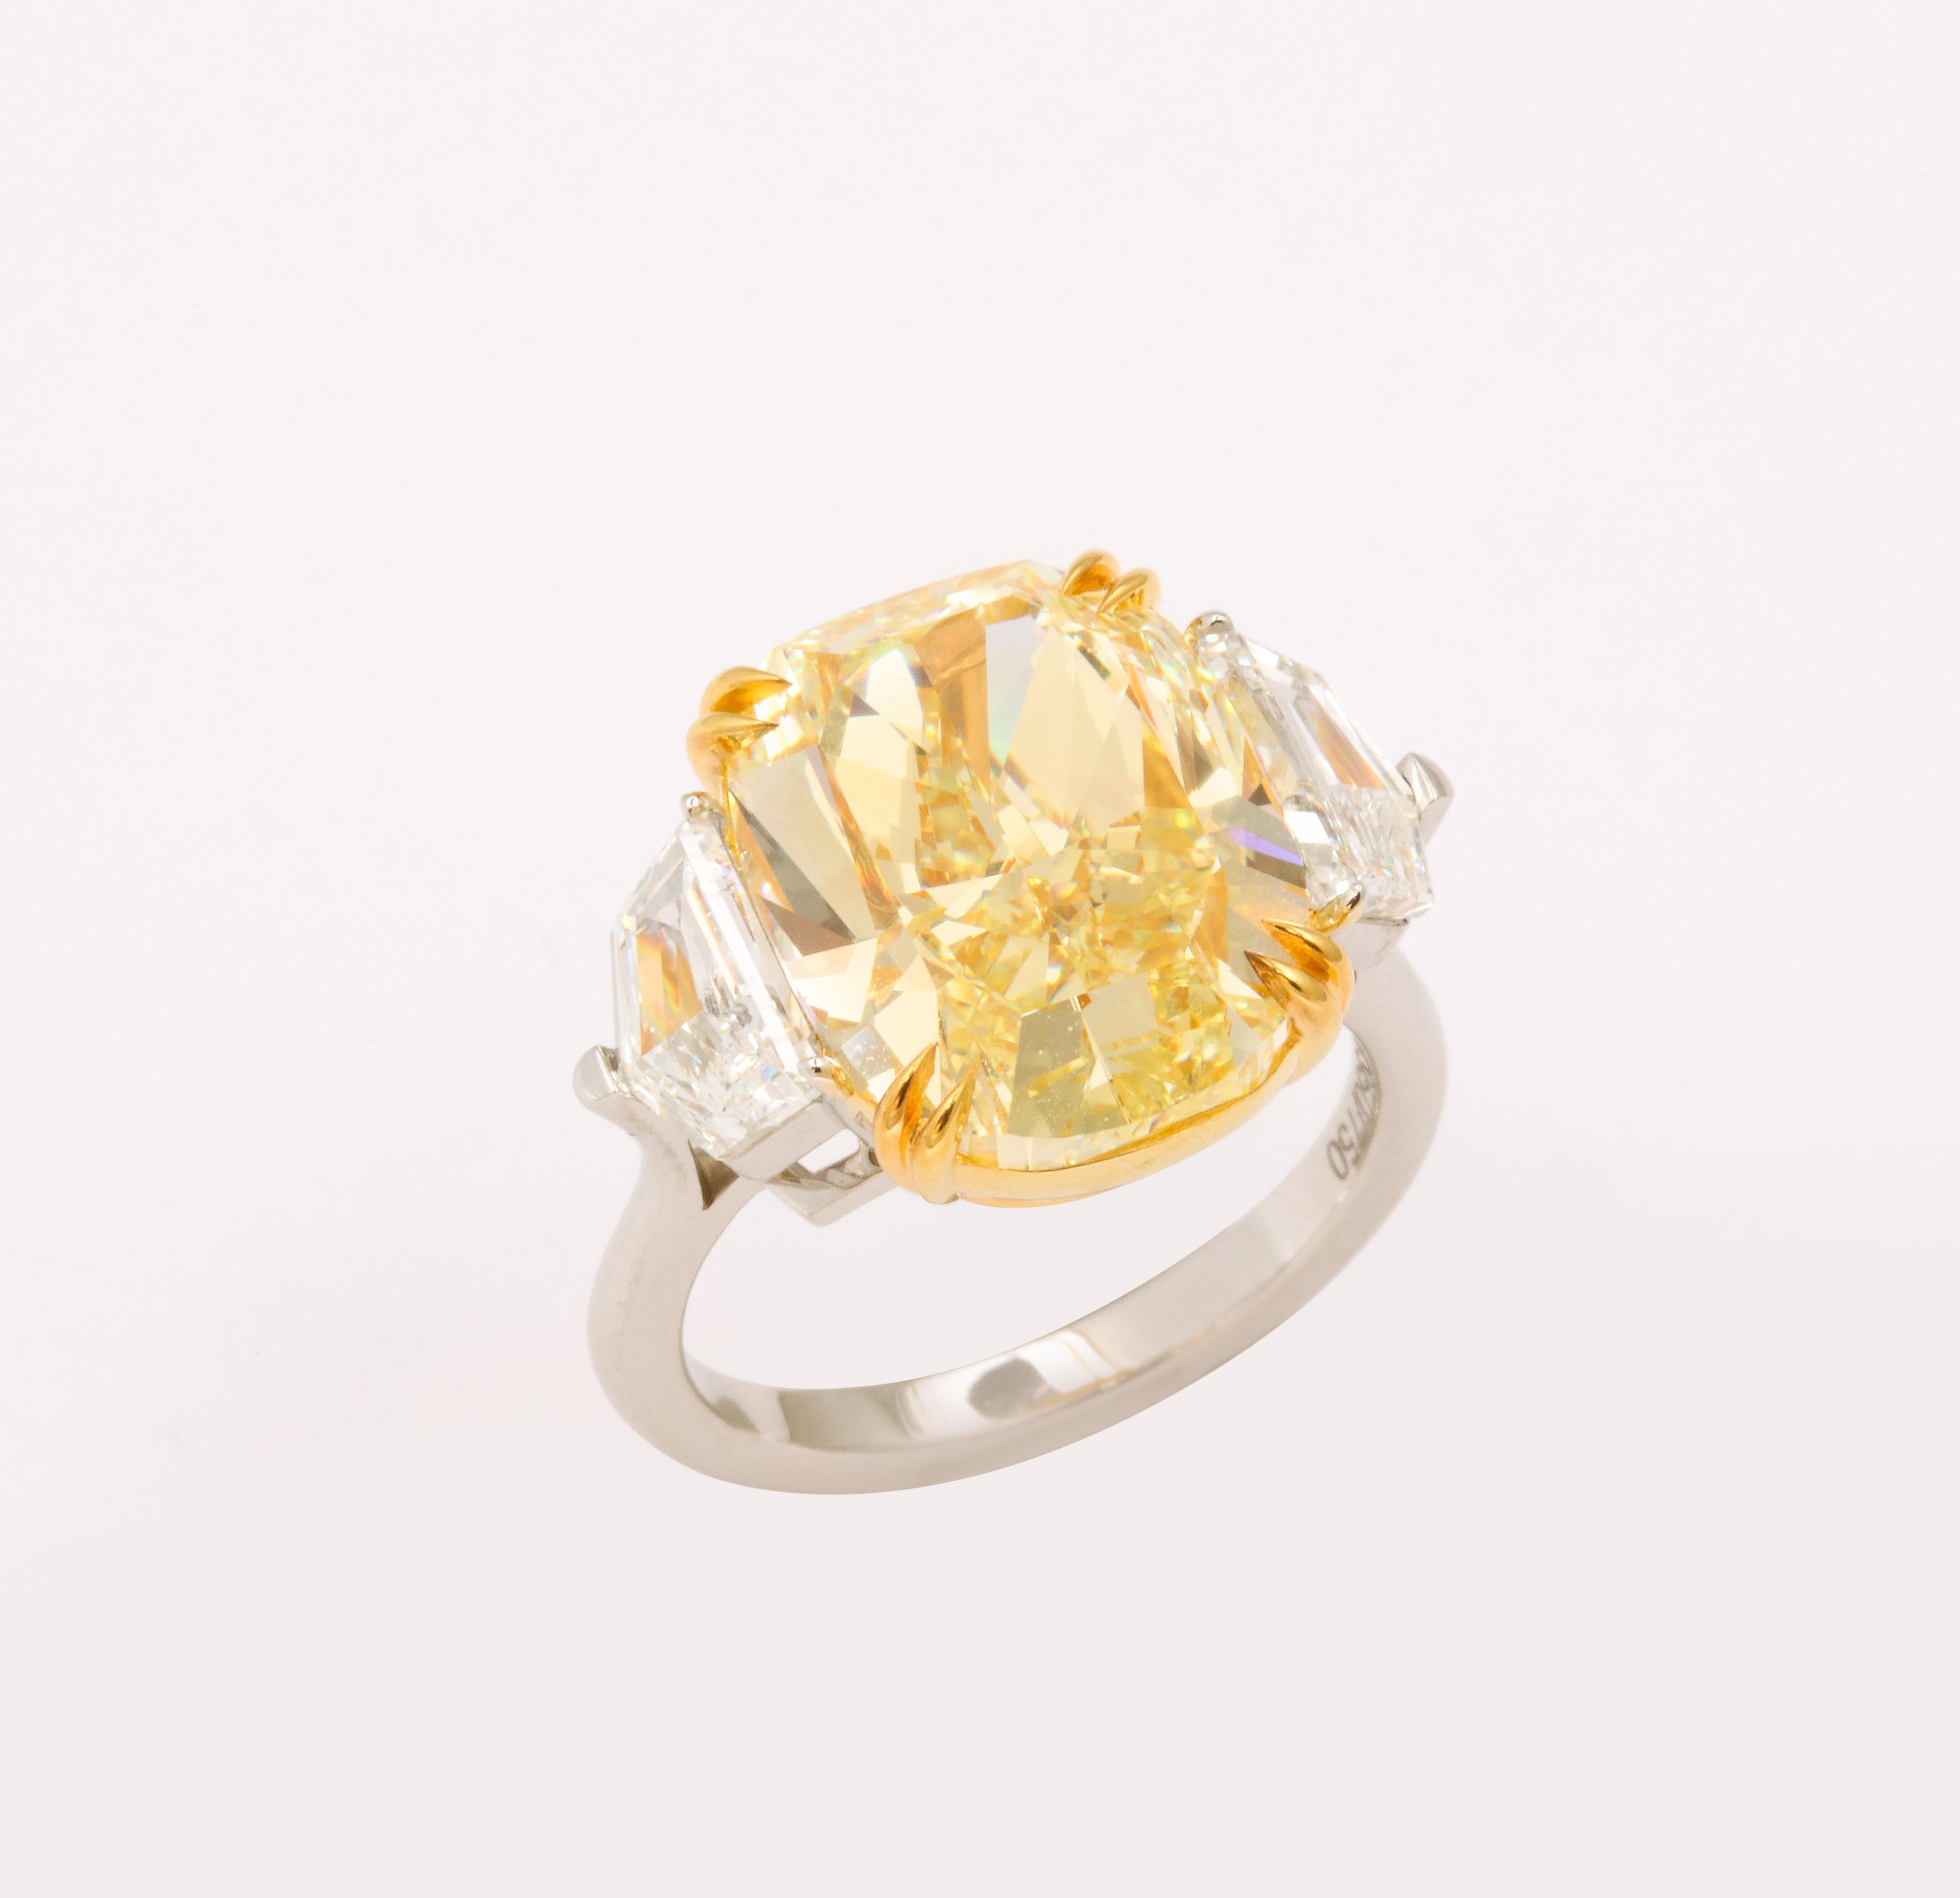 10 Carat Fancy Yellow Diamond Ring 3